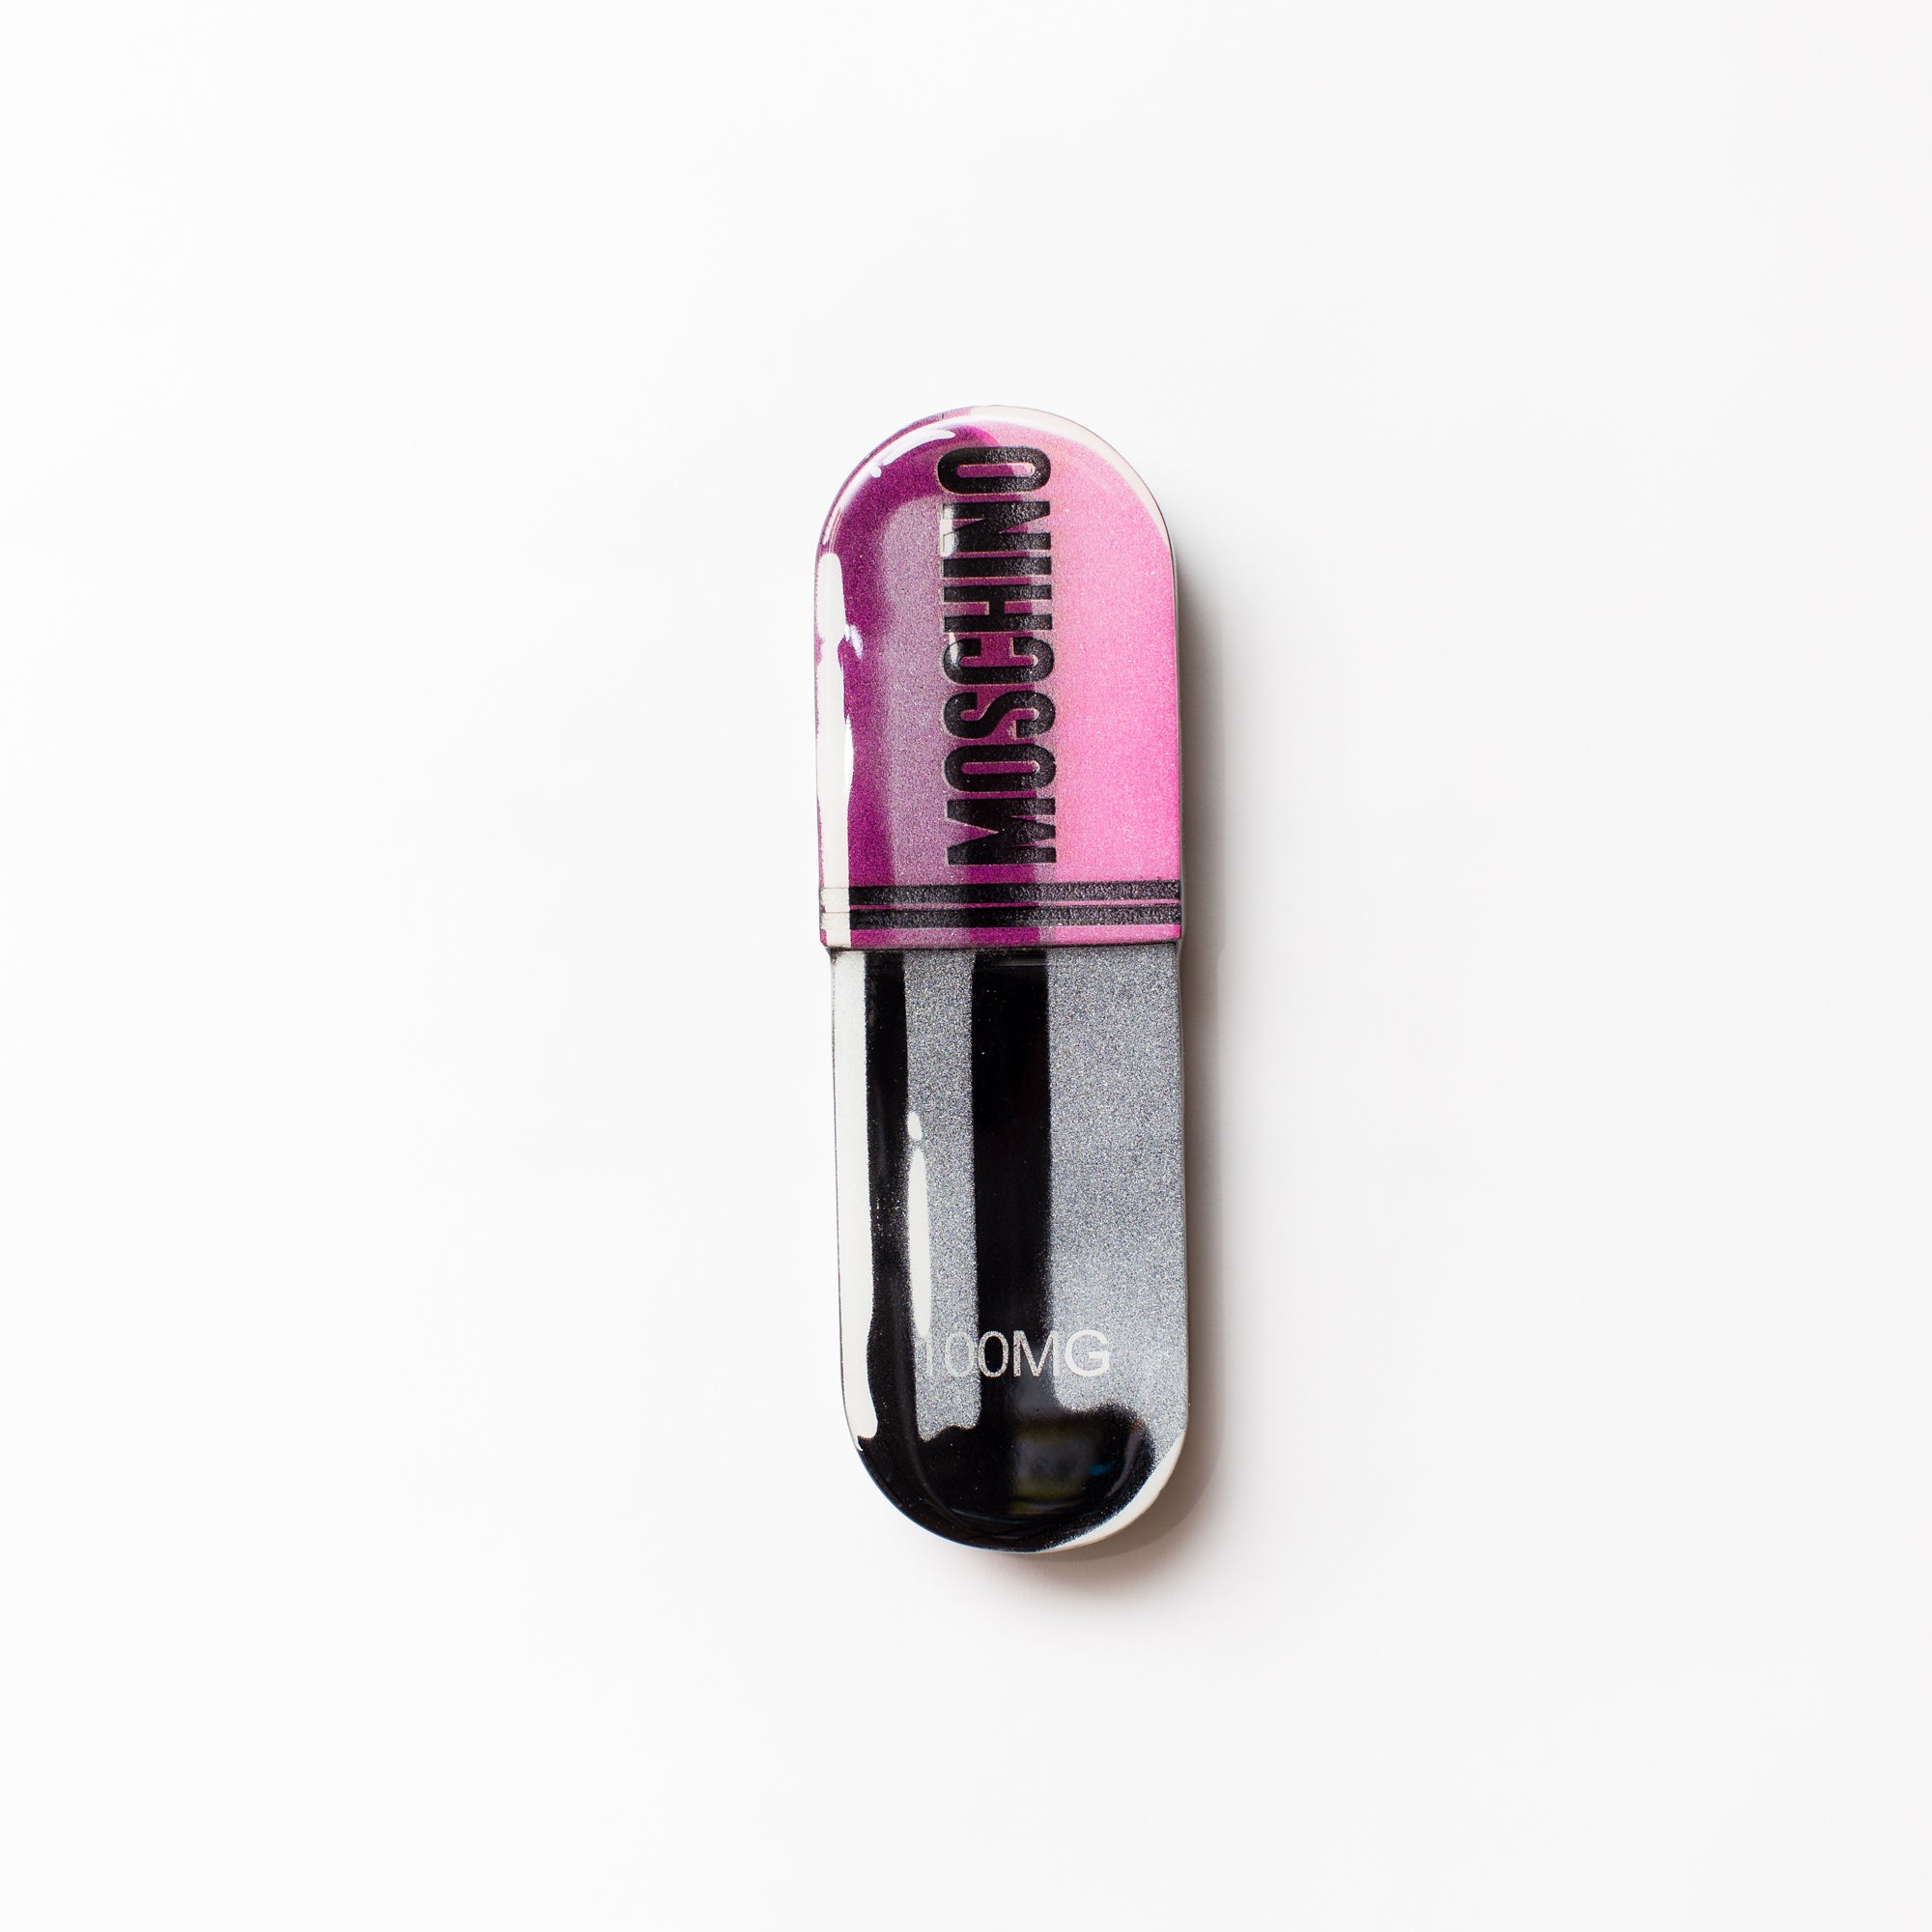 Fashion Addict - Editions (Pill Bottle)